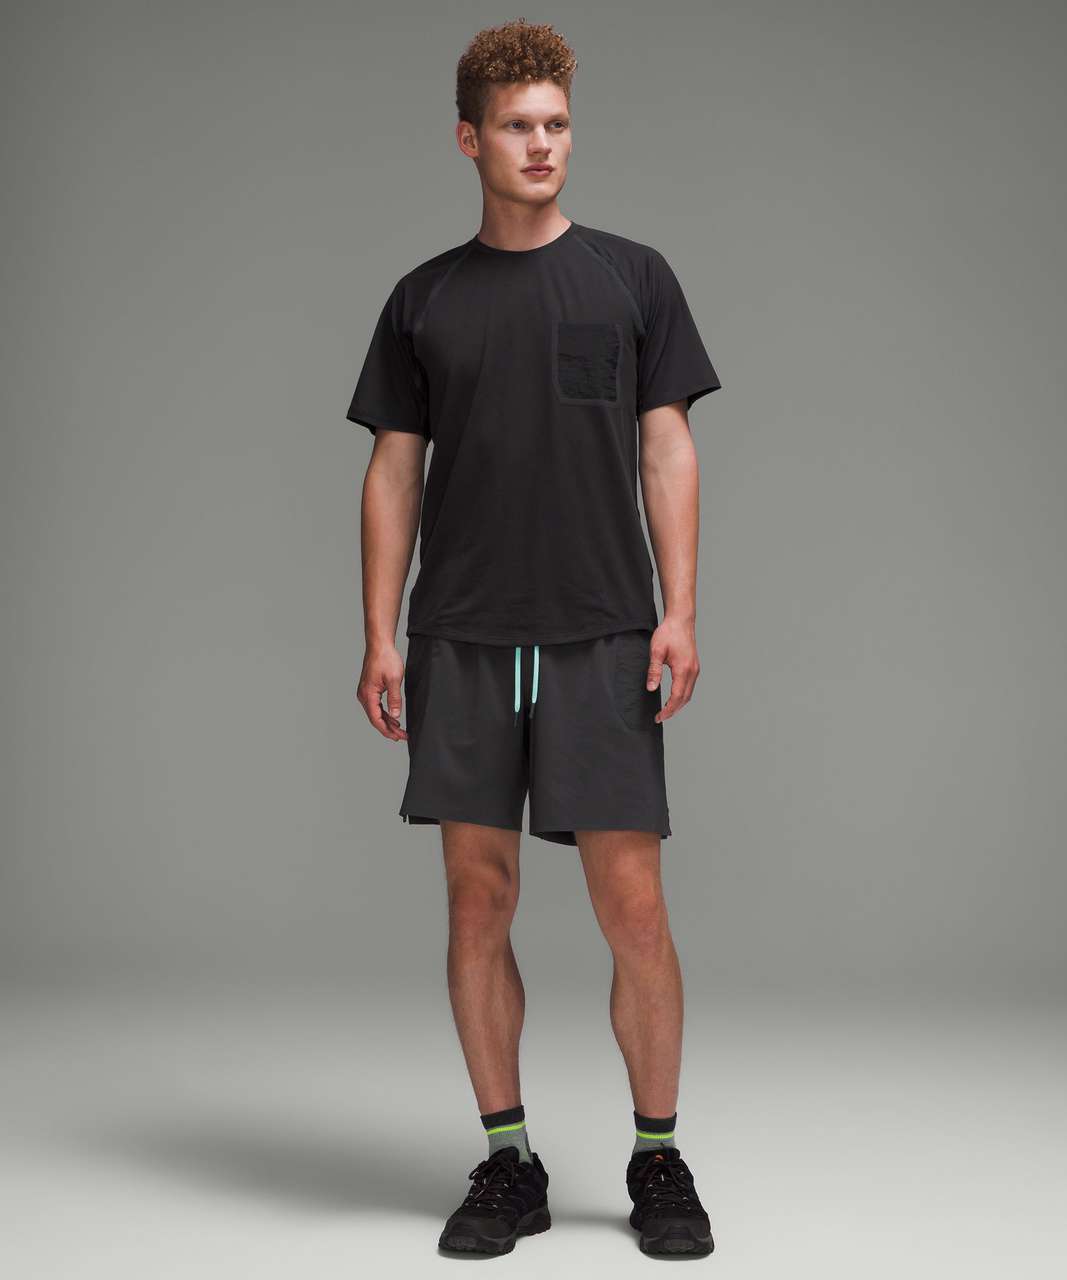 Lululemon Ventilated Hiking Short Sleeve Shirt - Black (First Release)